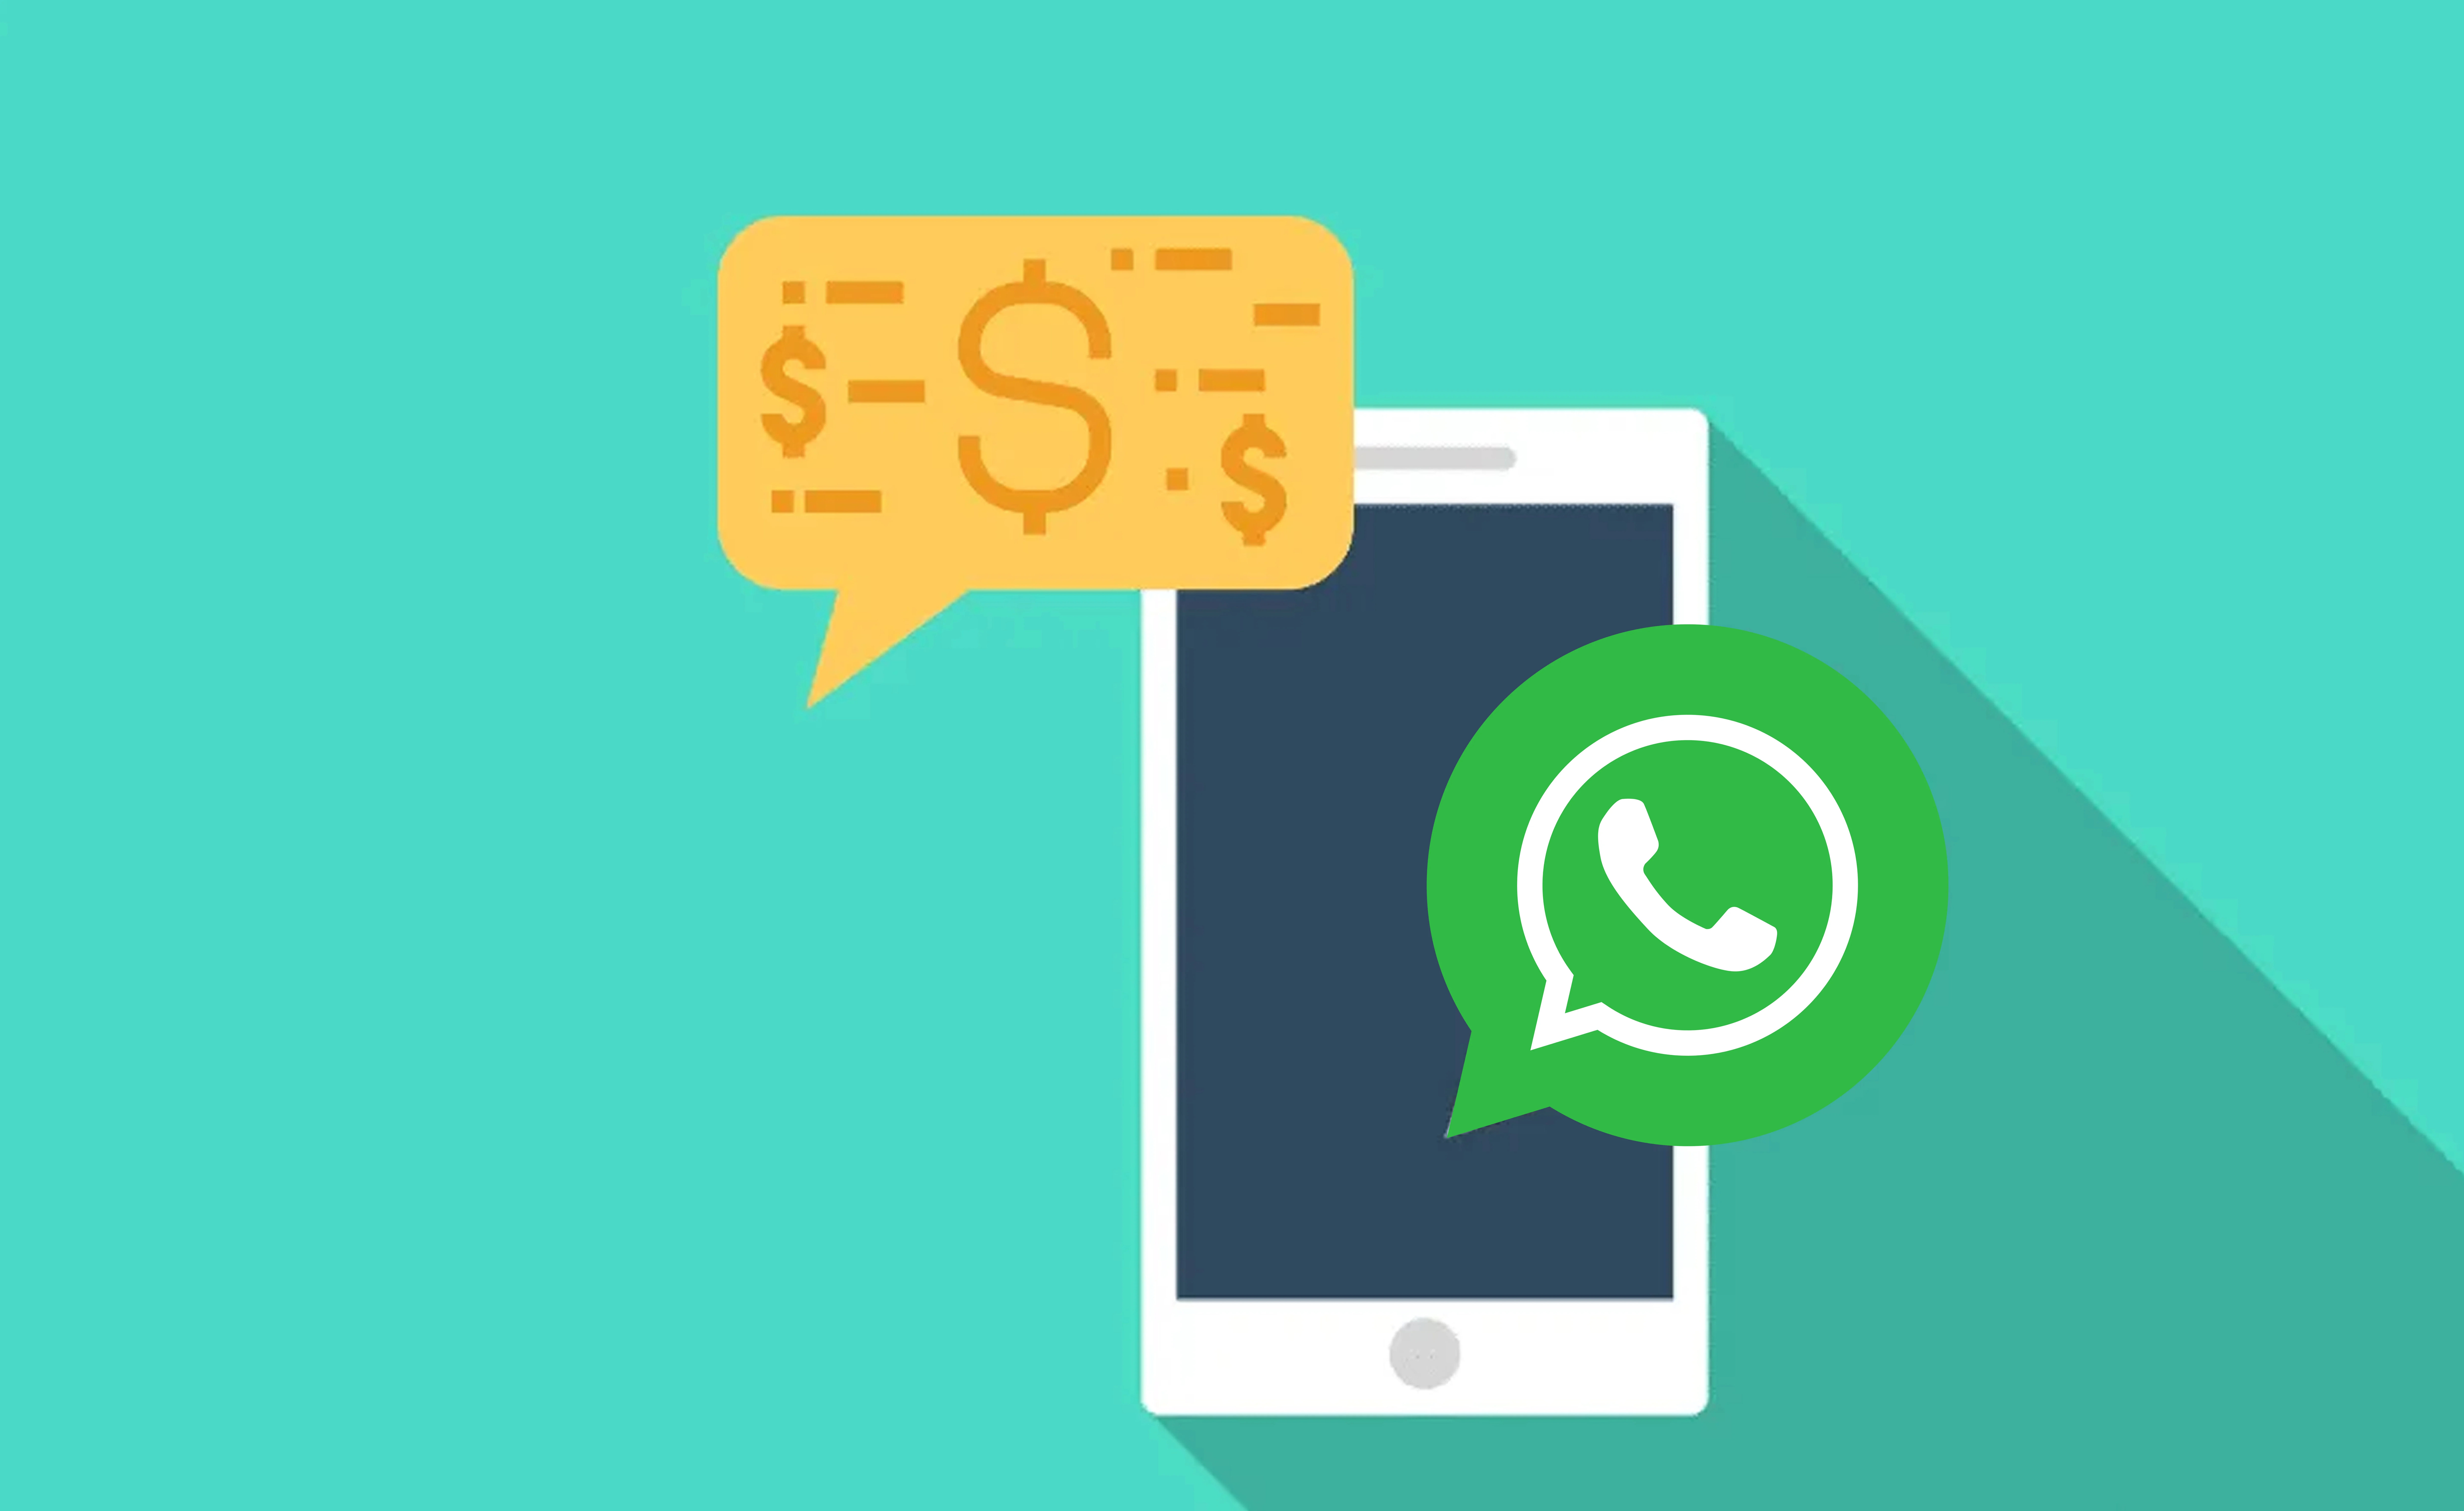 WhatsApp Business API pricing